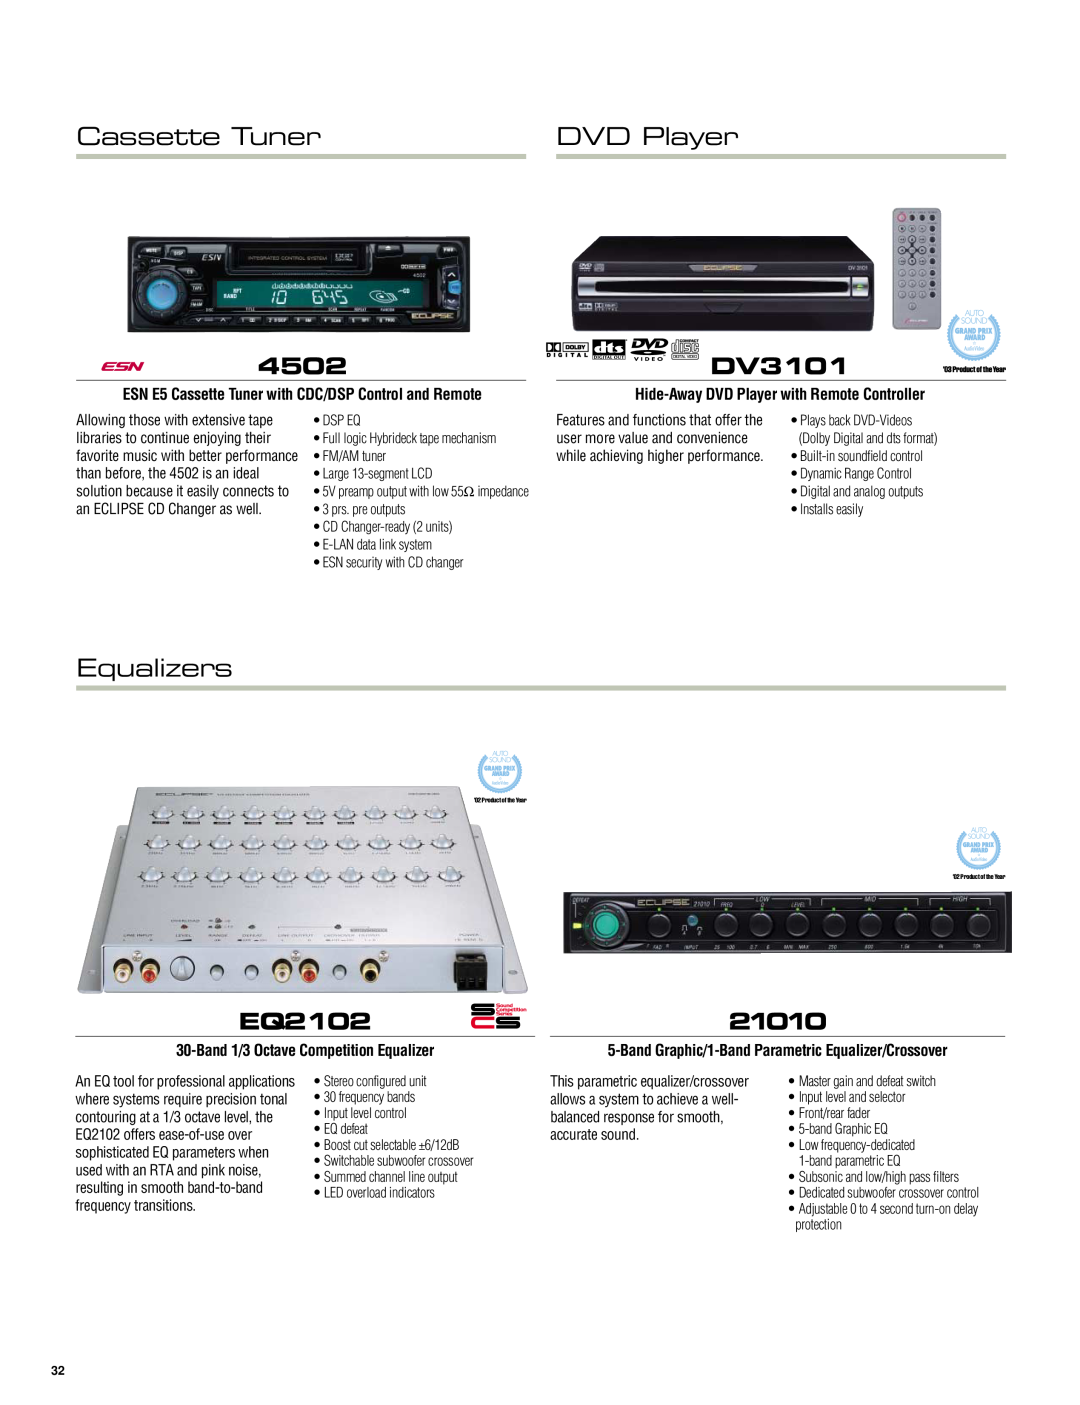 Eclipse - Fujitsu Ten SIR-ECL1, AVX5000, AVN5495, CH3083 Cassette Tuner, DVD Player, Equalizers, 4502, DV3101, EQ2102, 21010 